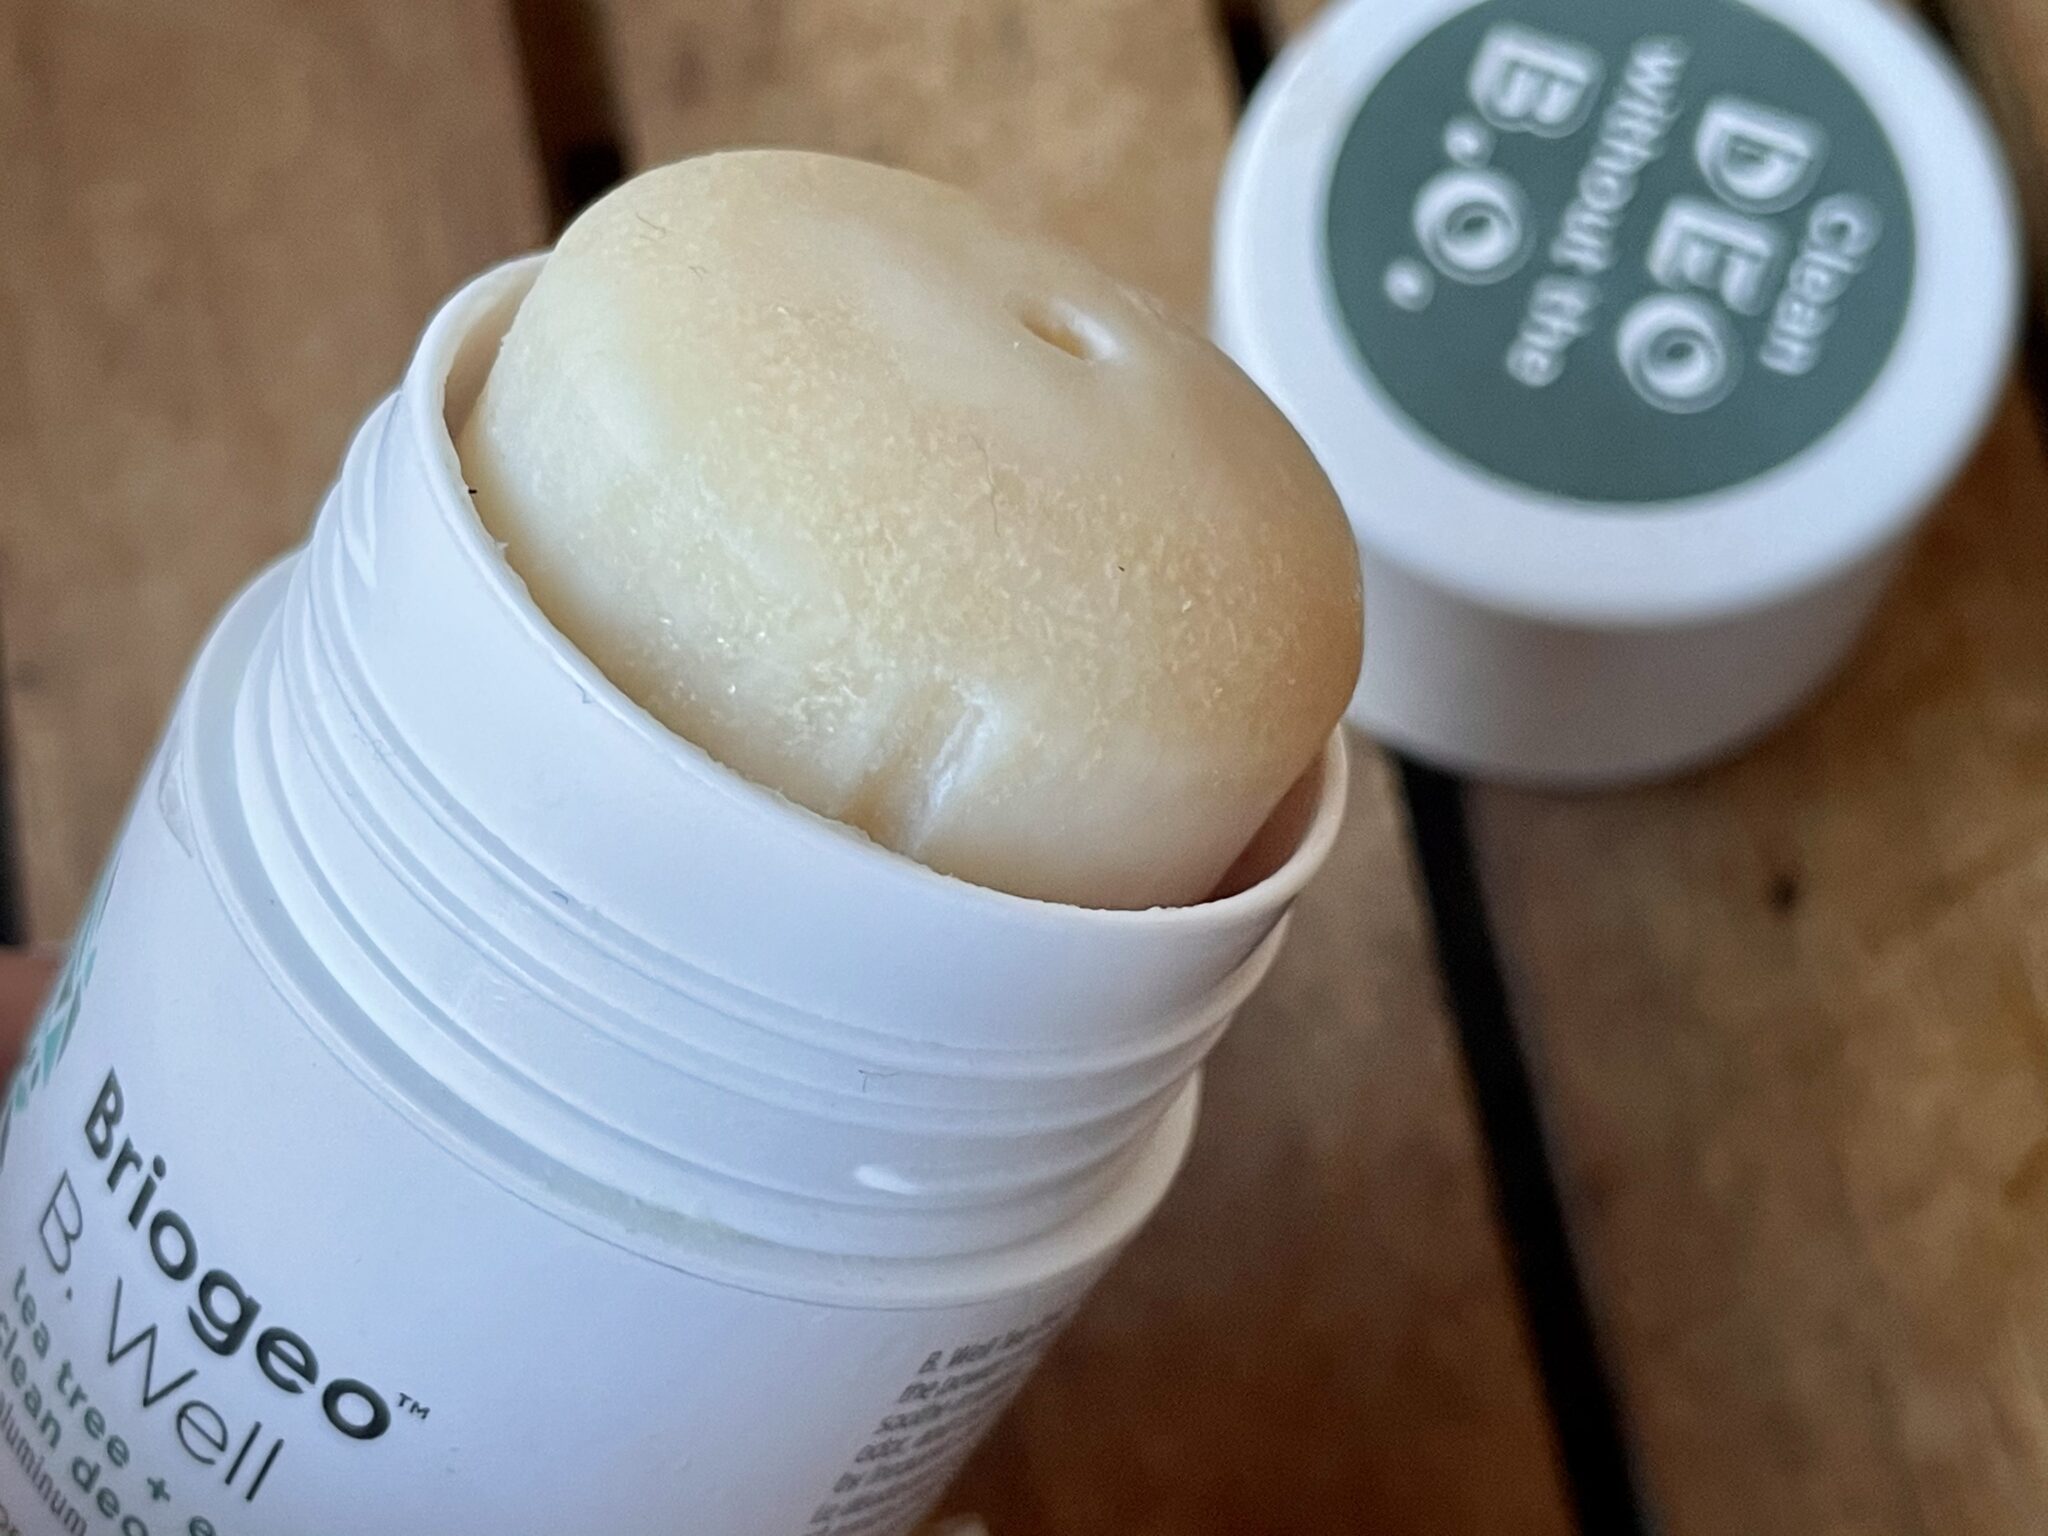 Briogeo Review Best & Worst Briogeo Products 2024 Organic Beauty Lover